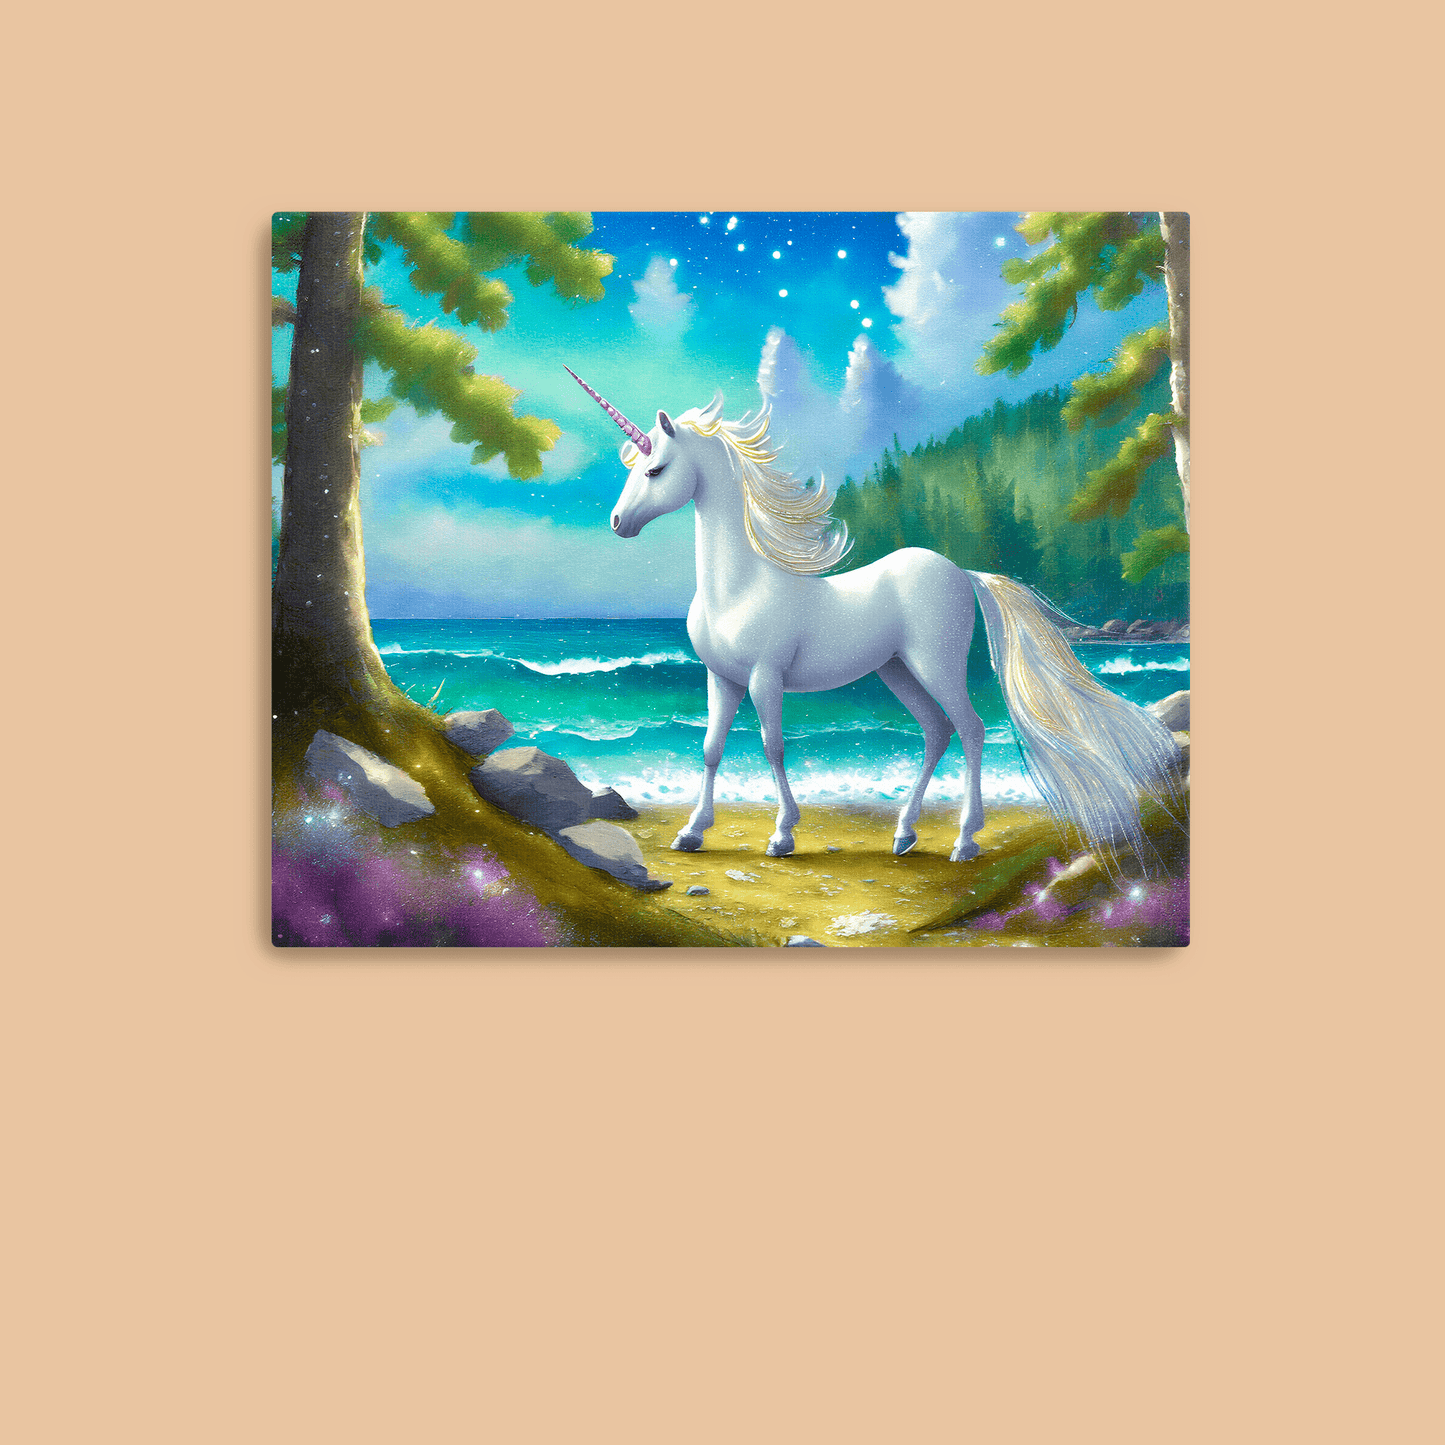 Unicorn By the Sea - Metal Poster - Premium Metal Poster